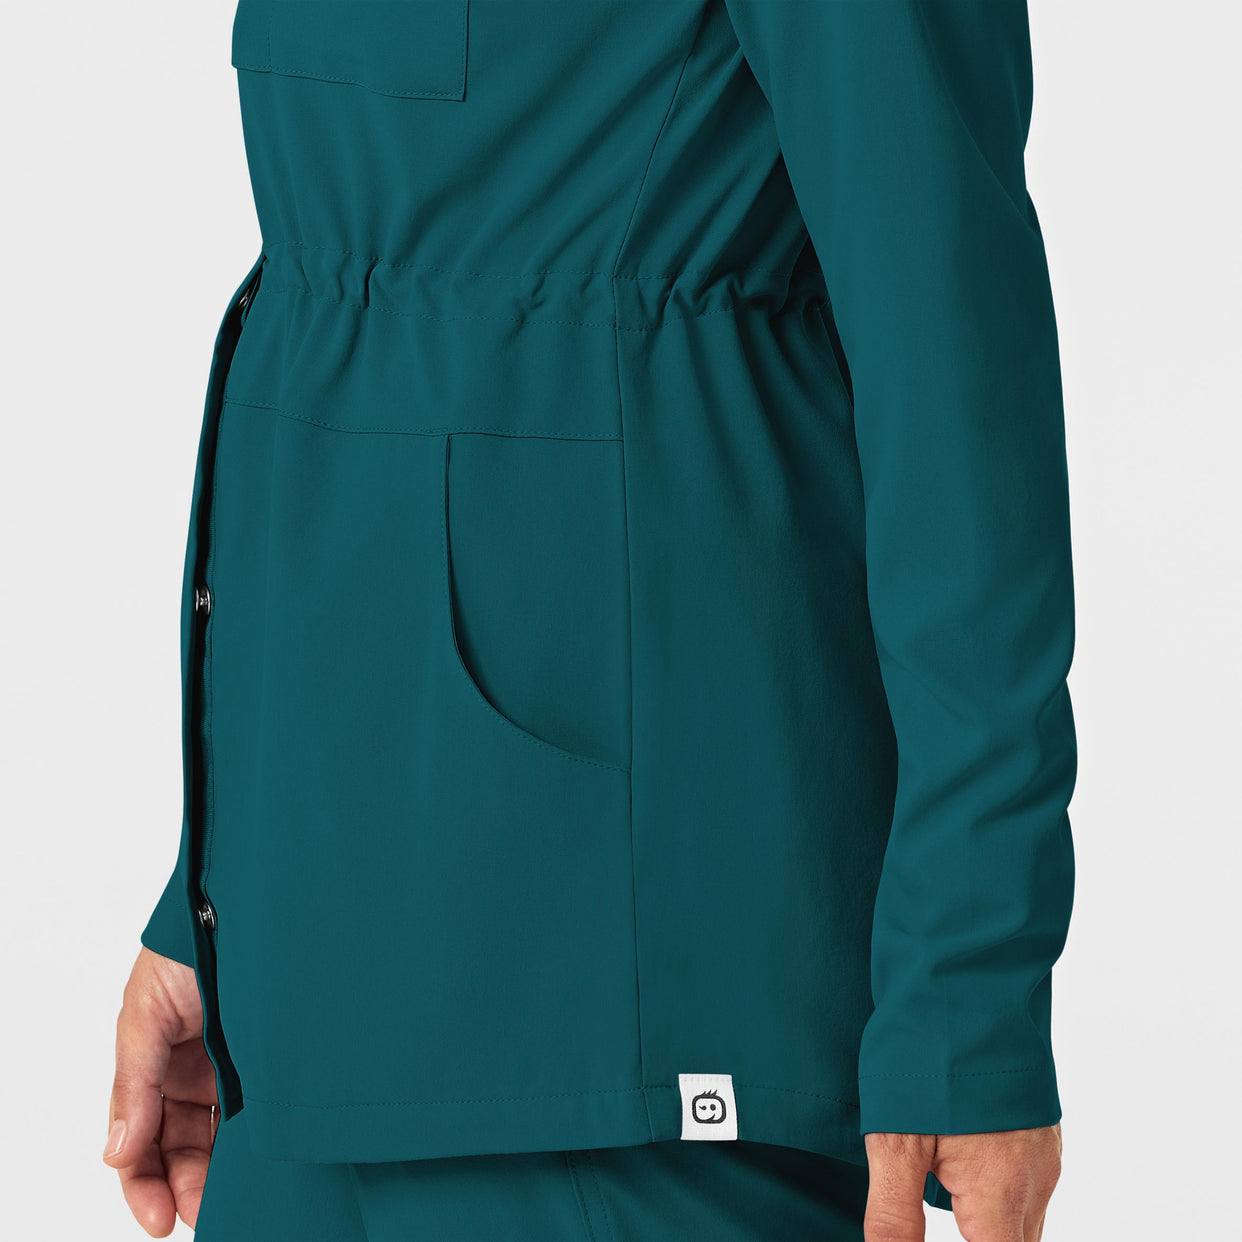 RENEW Women's Convertible Hood Fashion Jacket Caribbean Blue back detail